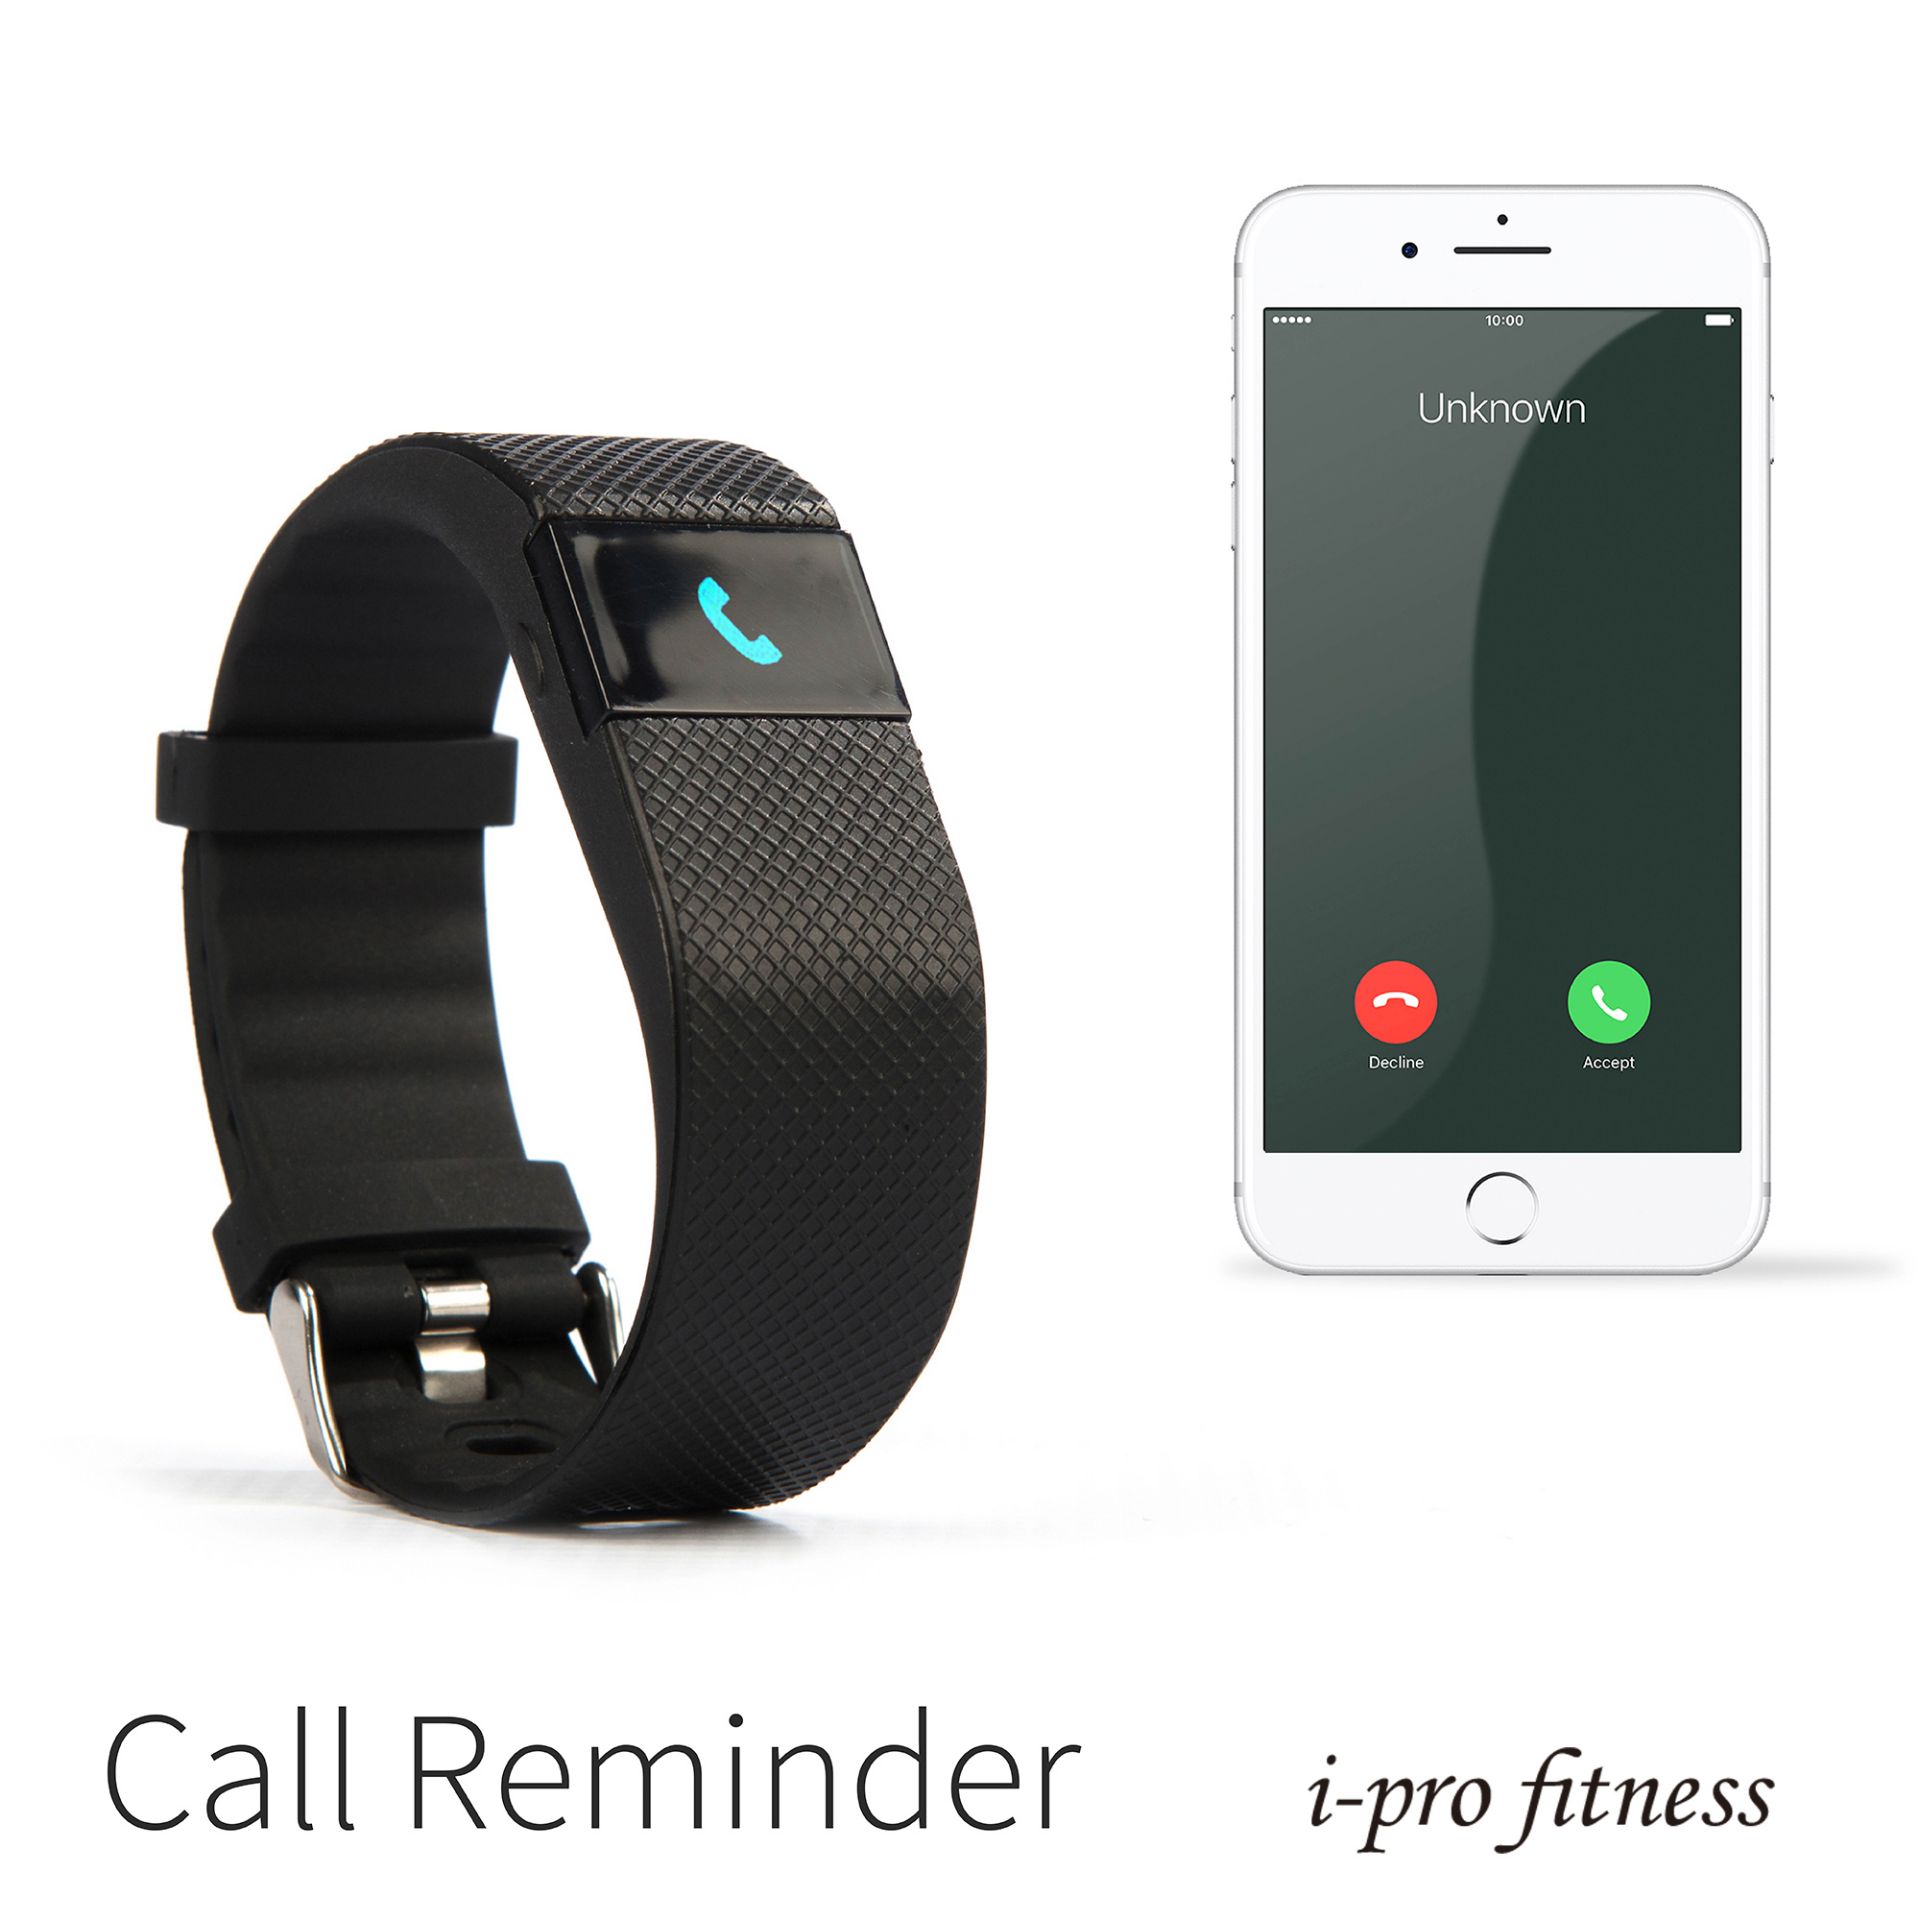 Fitness Tracker i-pro fitness, Bluetooth 4.0 Sports Smart Bracelet, Heart Rate Monitor - Image 2 of 8